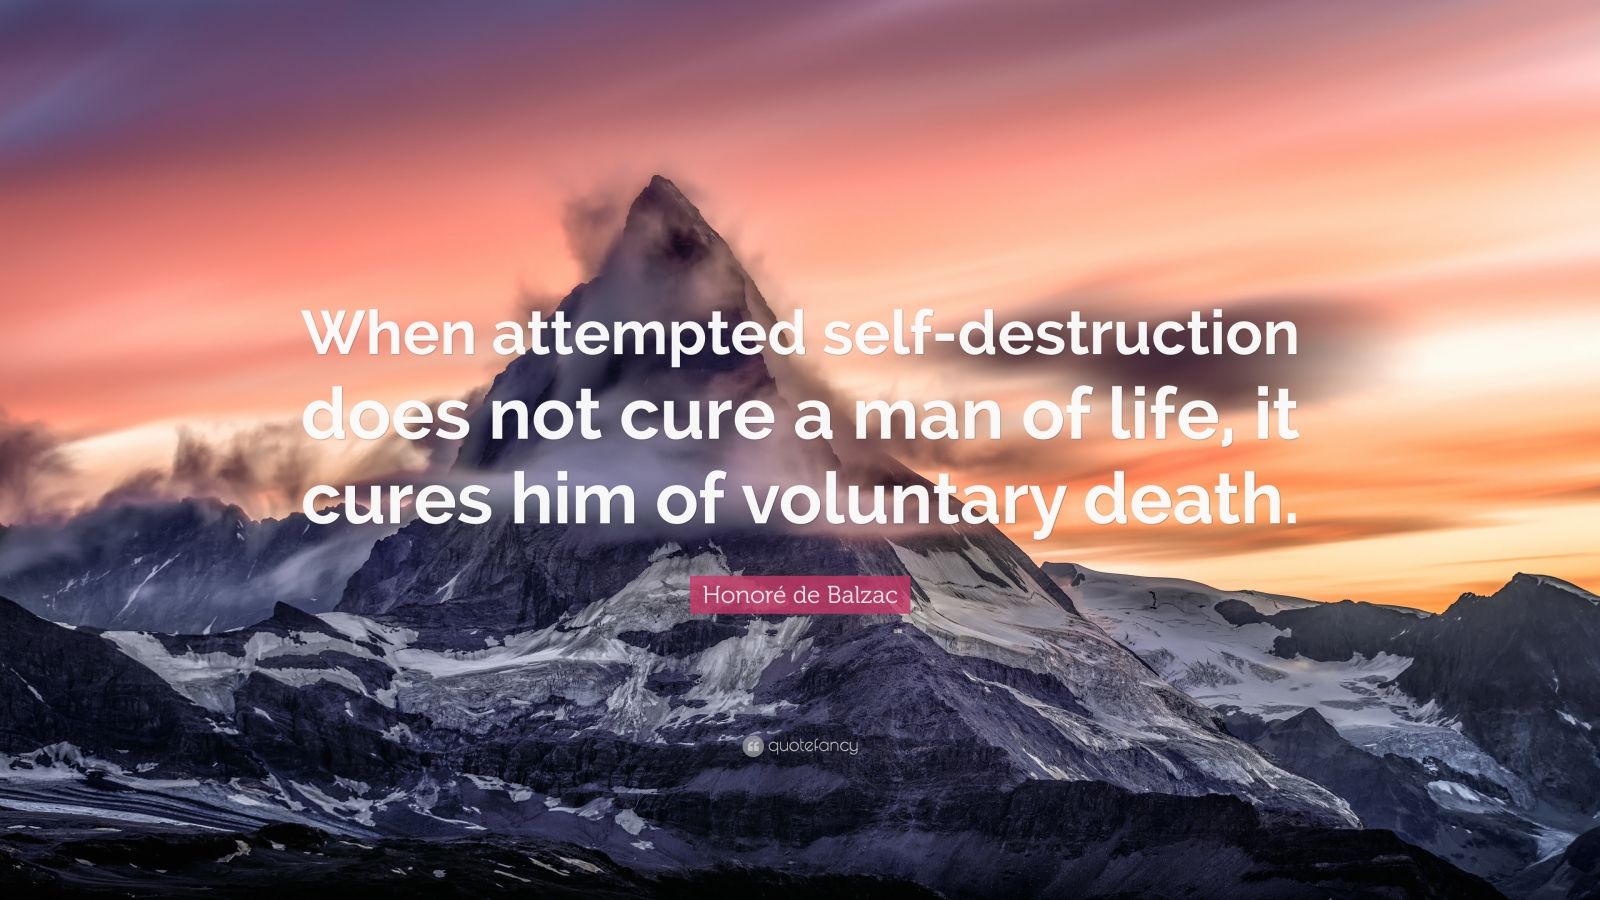 Honoré de Balzac Quote: “When attempted self-destruction does not cure a man of ...1600 x 900